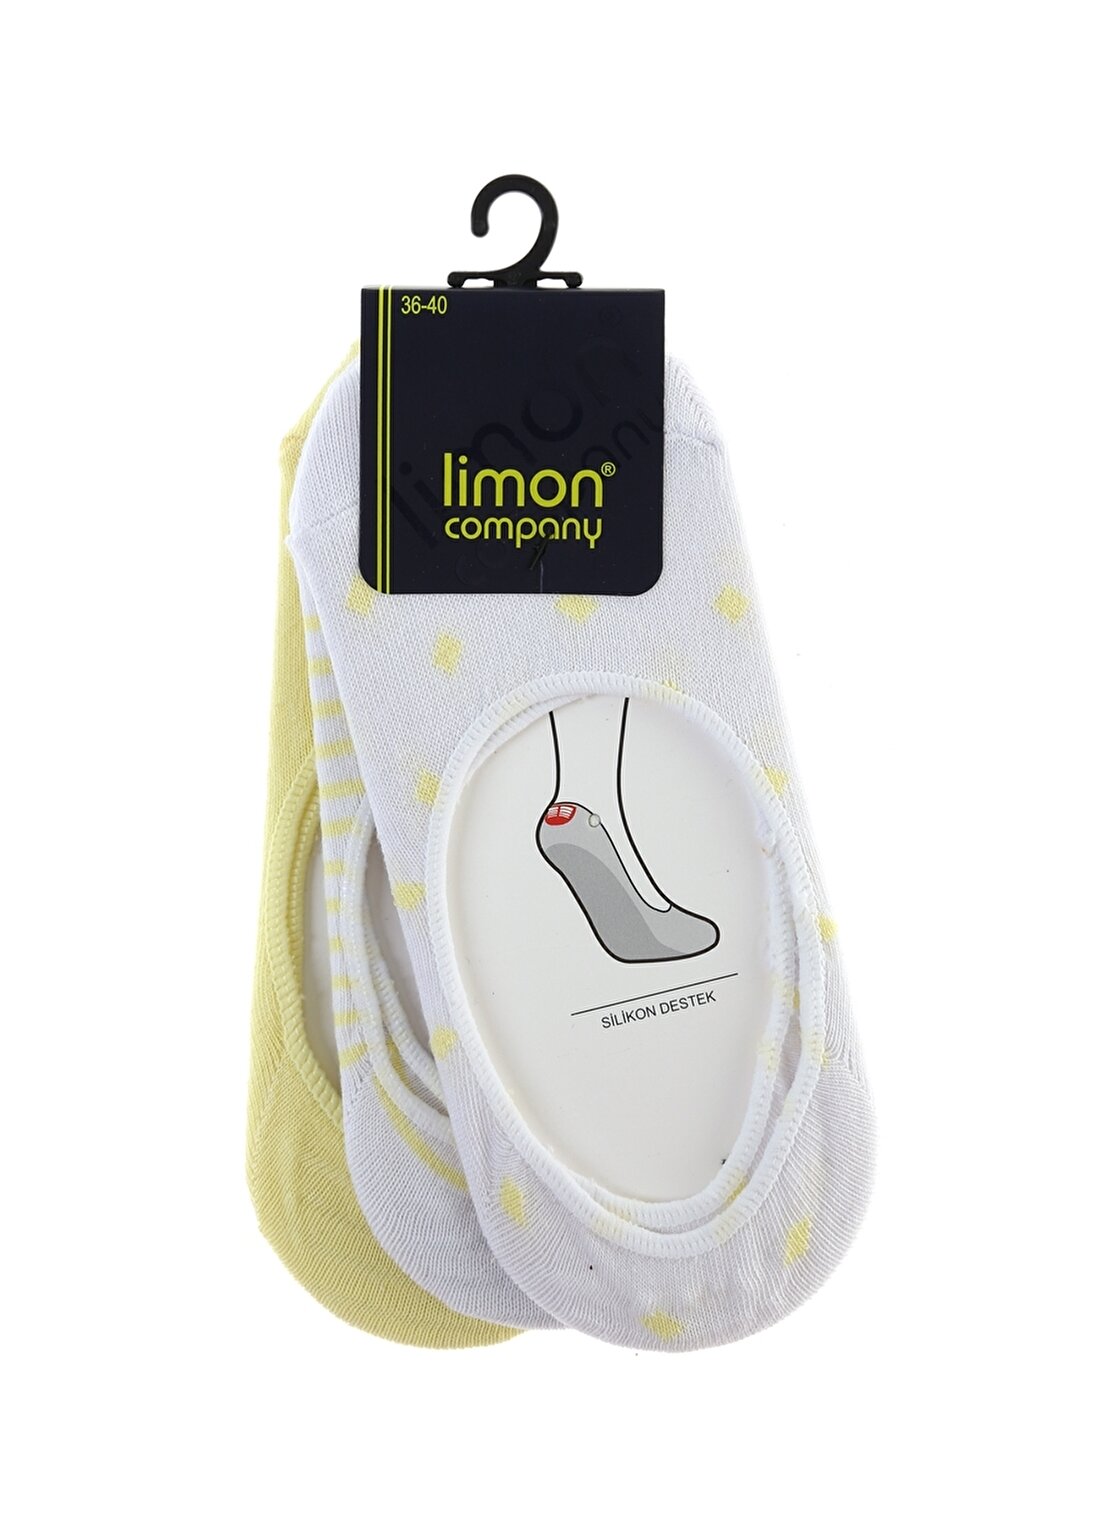 Limon 3'Lü Soket Çorap